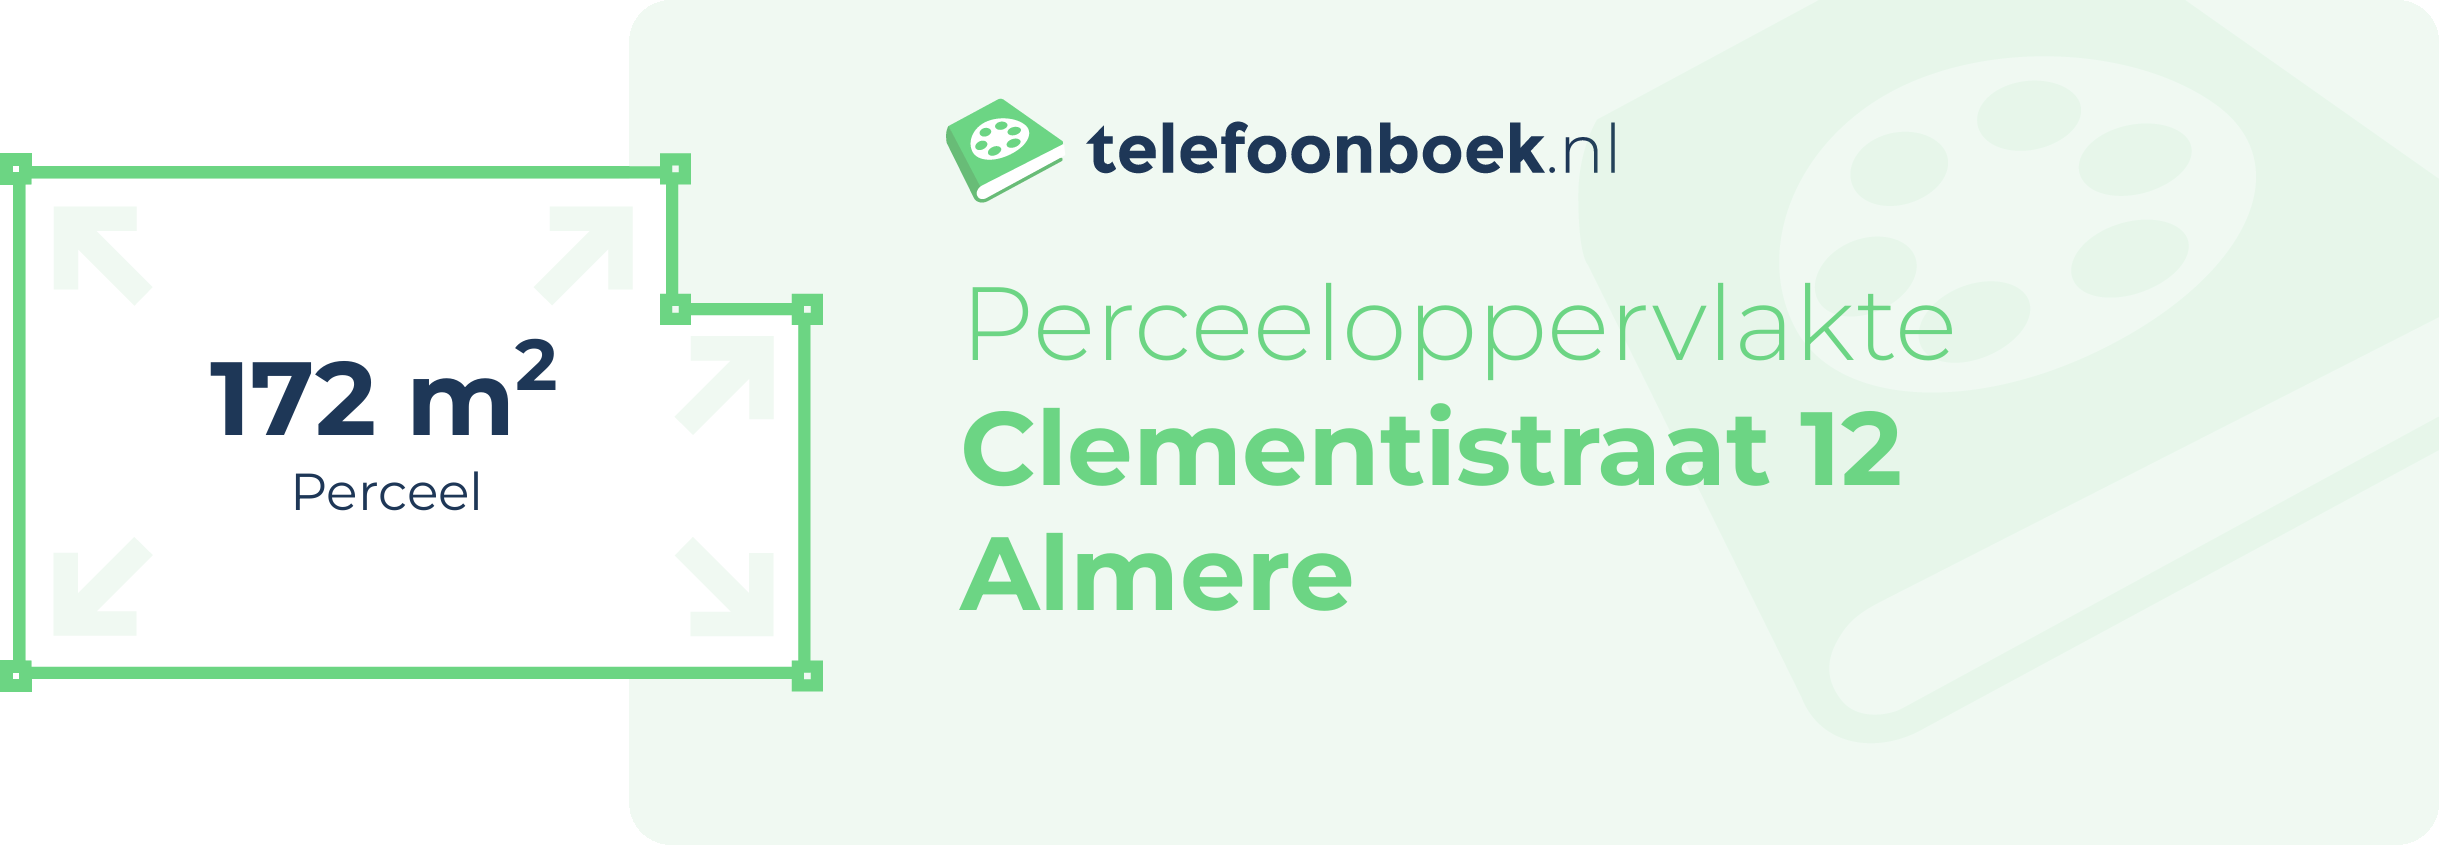 Perceeloppervlakte Clementistraat 12 Almere